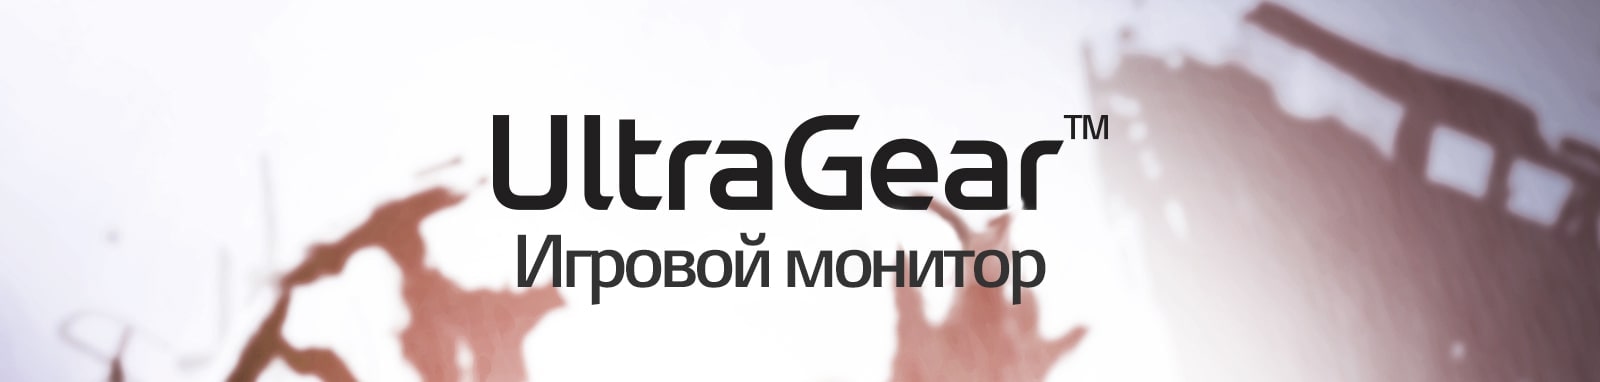 MNT-UltraGear-24GL600F-01-UltraGear-Desktop_01-min_01